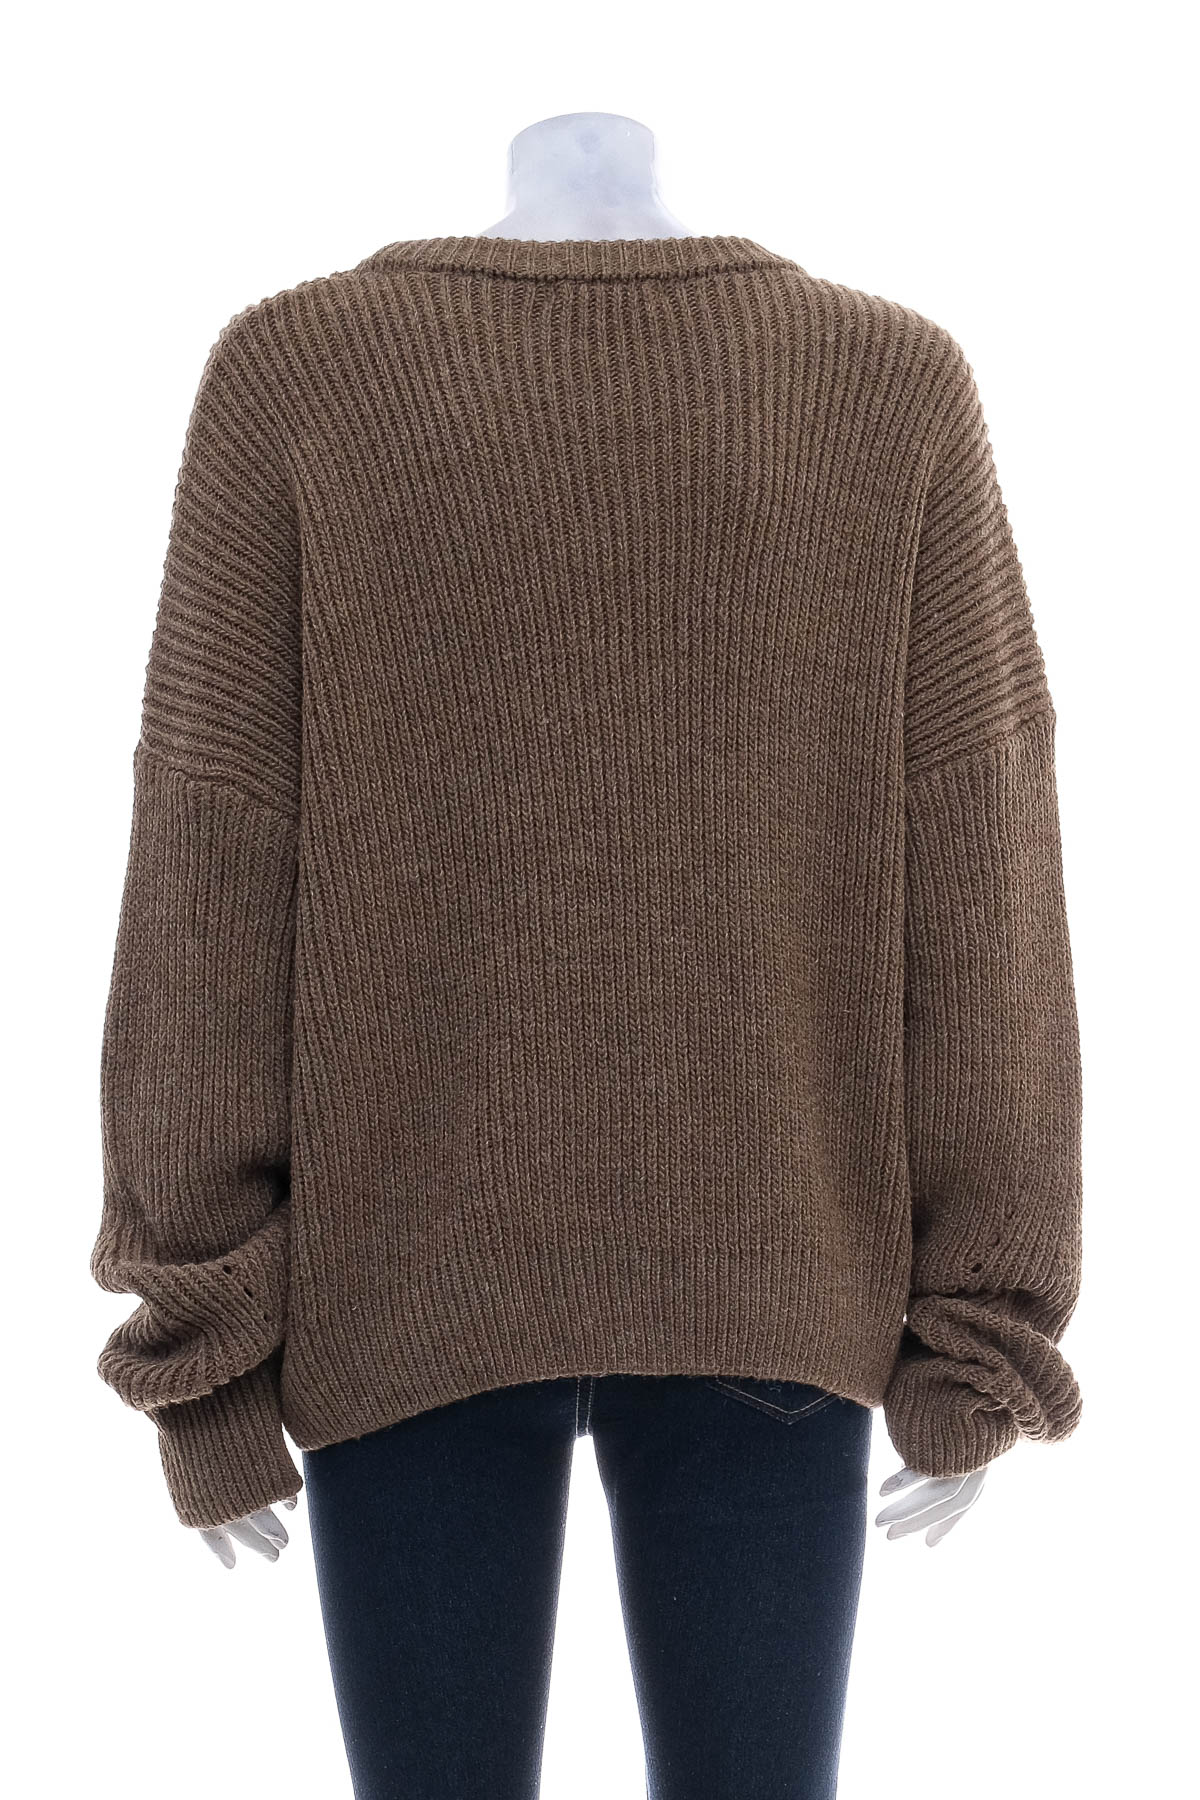 Women's sweater - NA-KD - 1